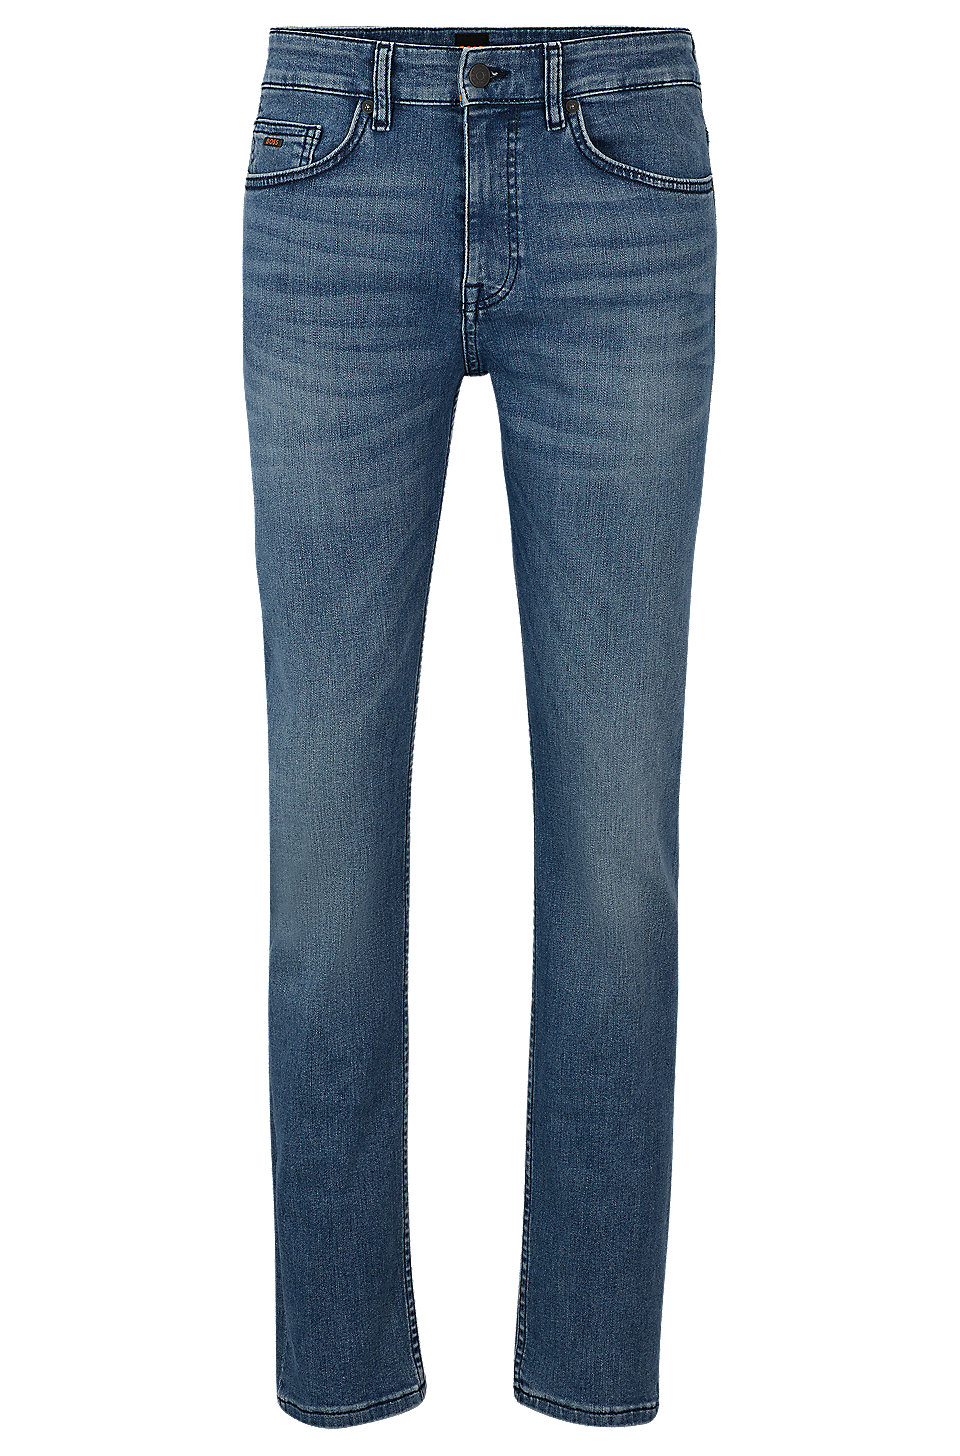 BOSS - Slim-fit jeans in mid-blue soft stretch denim